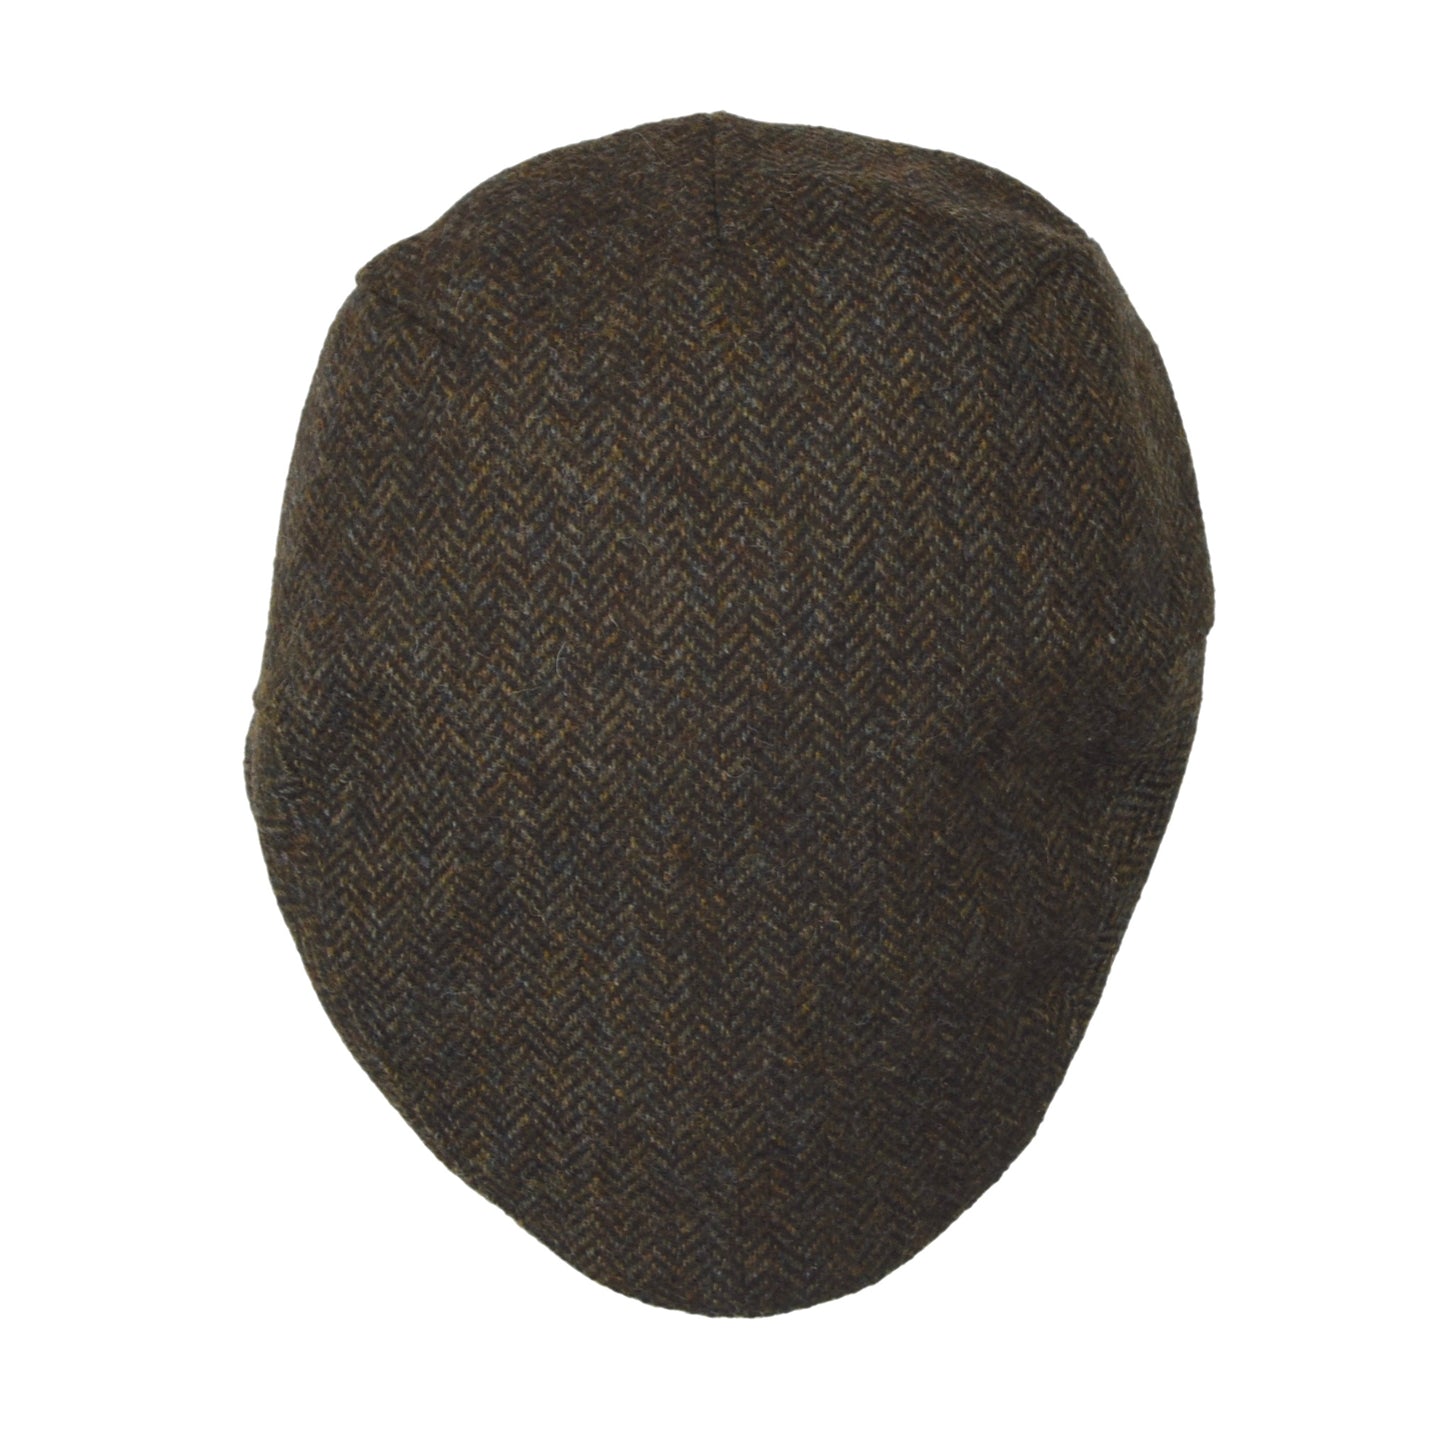 M&S Moon Tweed Flat Cap/Hat Size Large 7 1/4-7 3/8 - Green